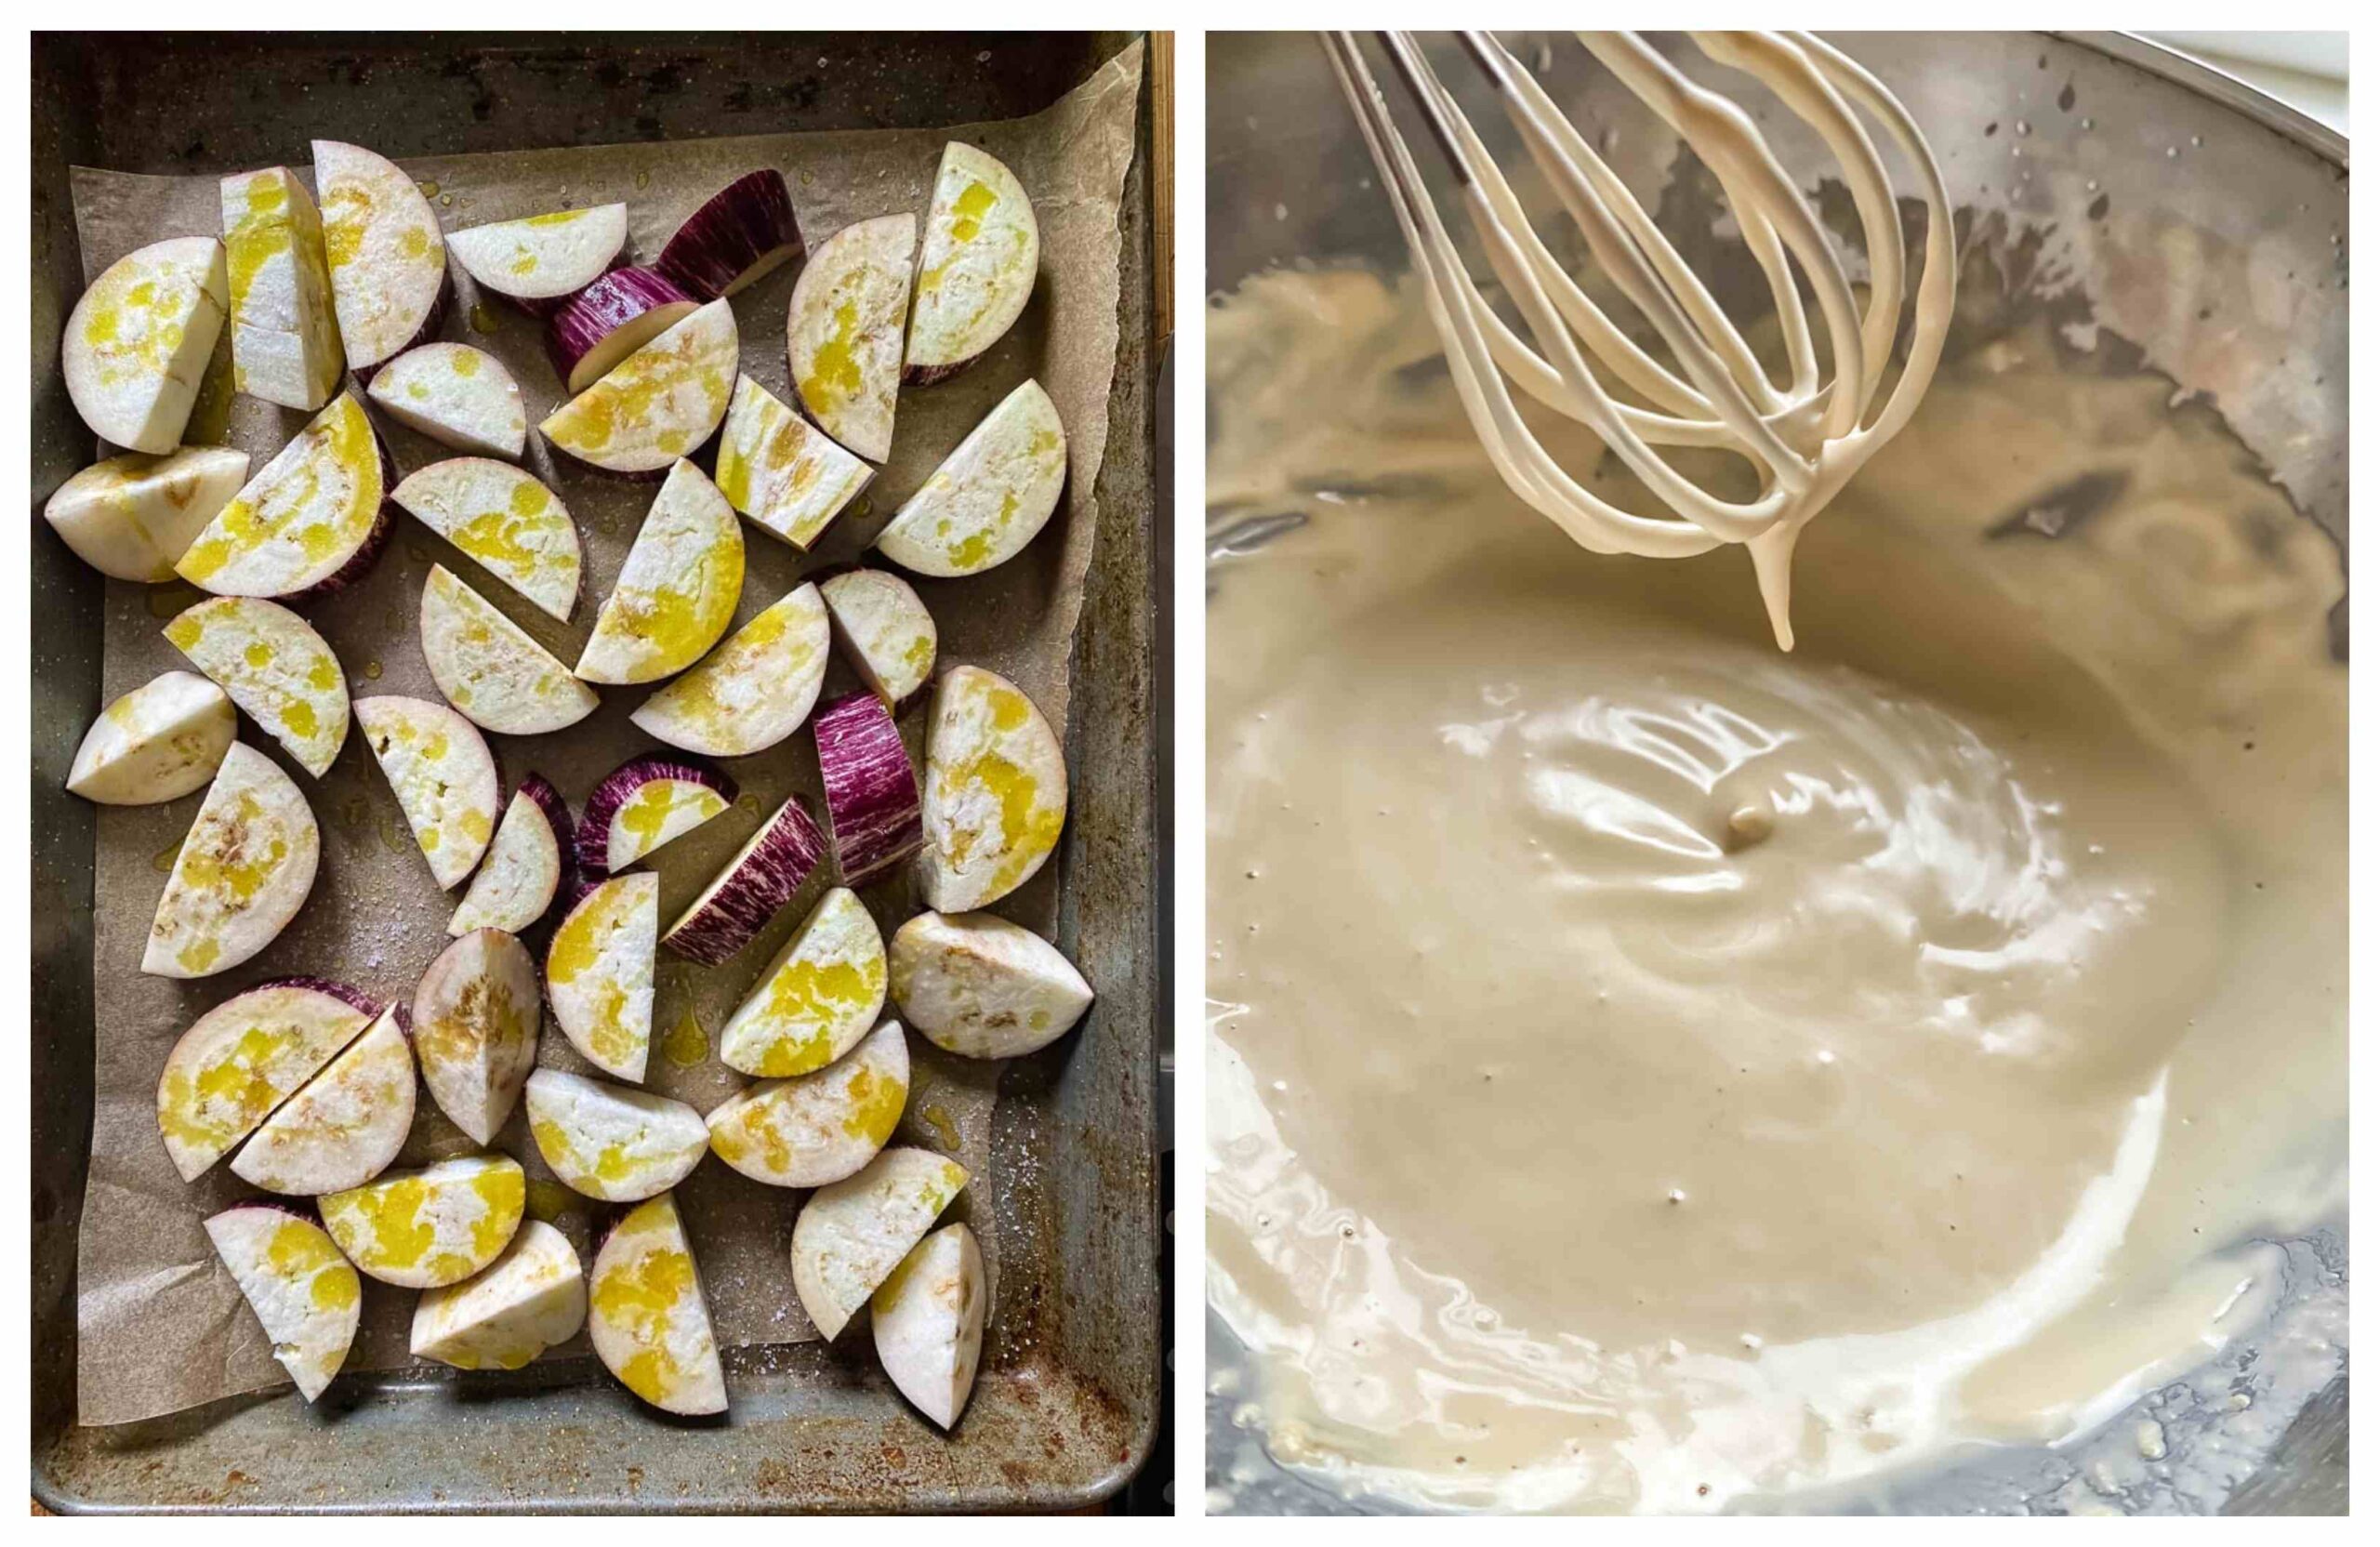 Roasted Aubergine with Garlic Tahini Sauce - The Veg Connection